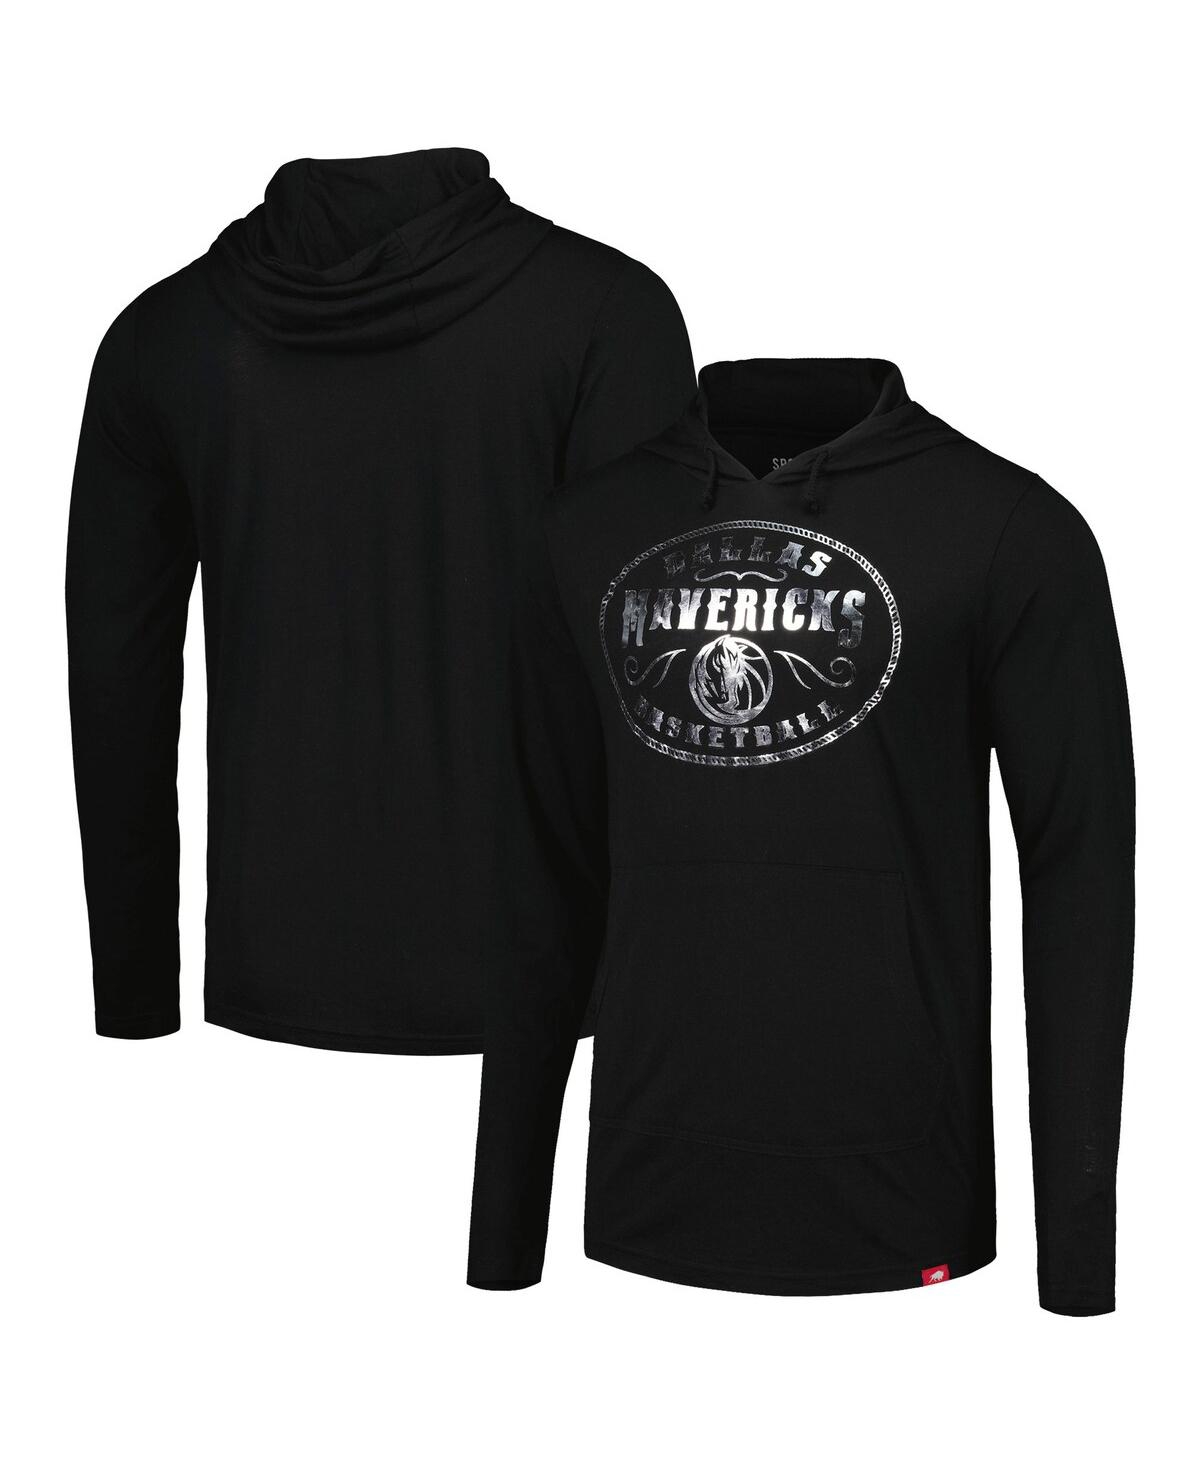 Men's and Women's Sportiqe Black Dallas Mavericks Rowan Tri-Blend Long Sleeve Hoodie T-shirt - Black